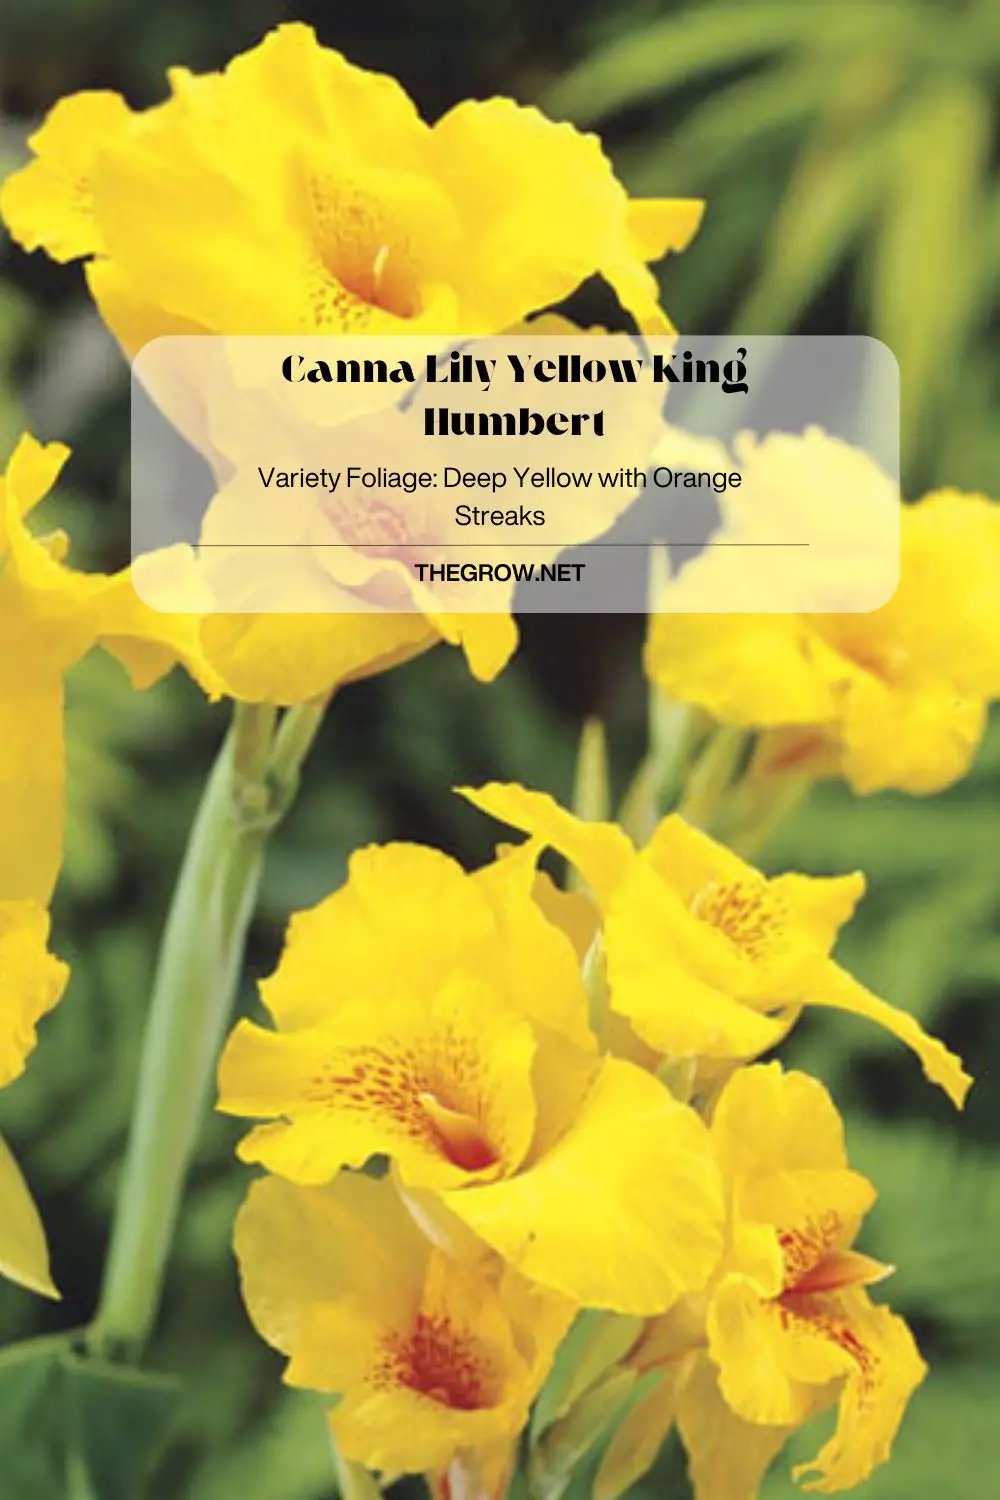 Canna Lily Yellow King Humbert